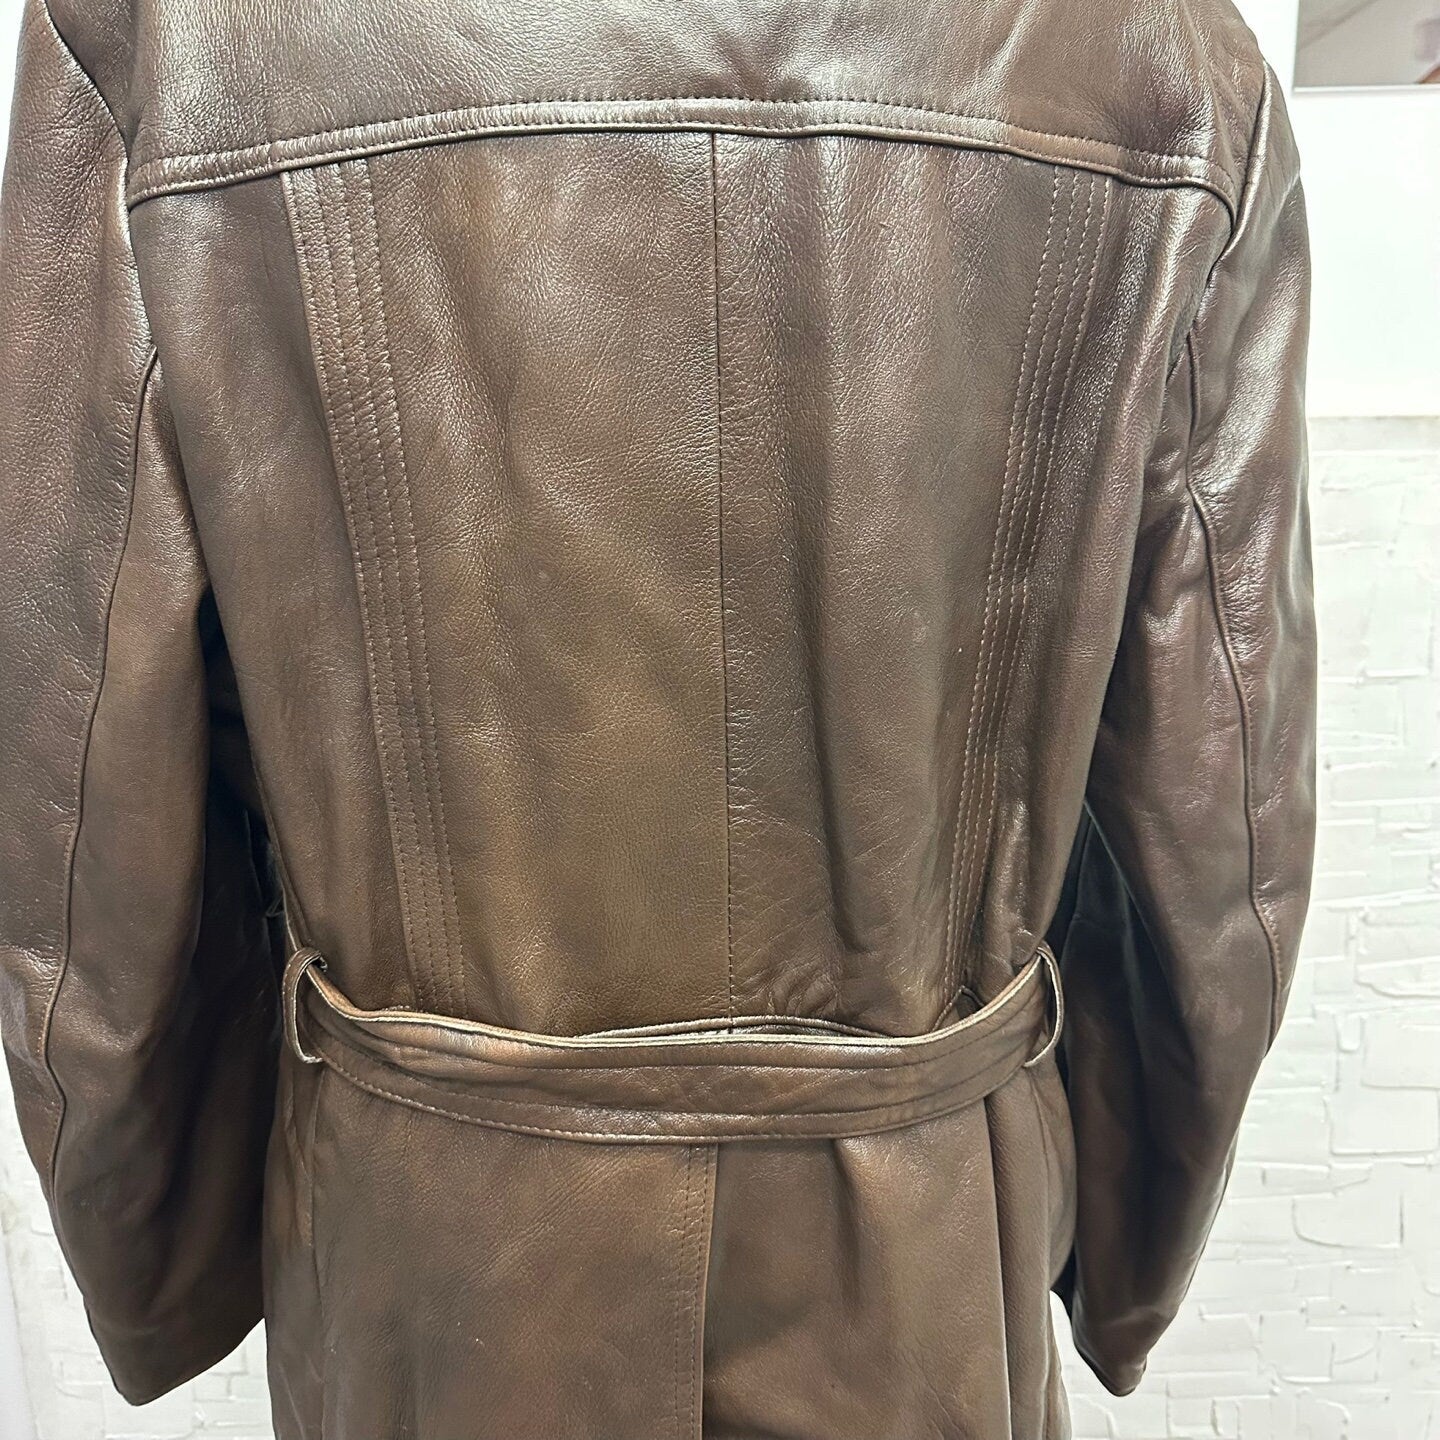 Vintage Leather Penny Lane Style Coat with Fur Collar Button up Closure and Belt | Vintage Coat | Afghan Coat | Size 44 | SKU ST-2002 |